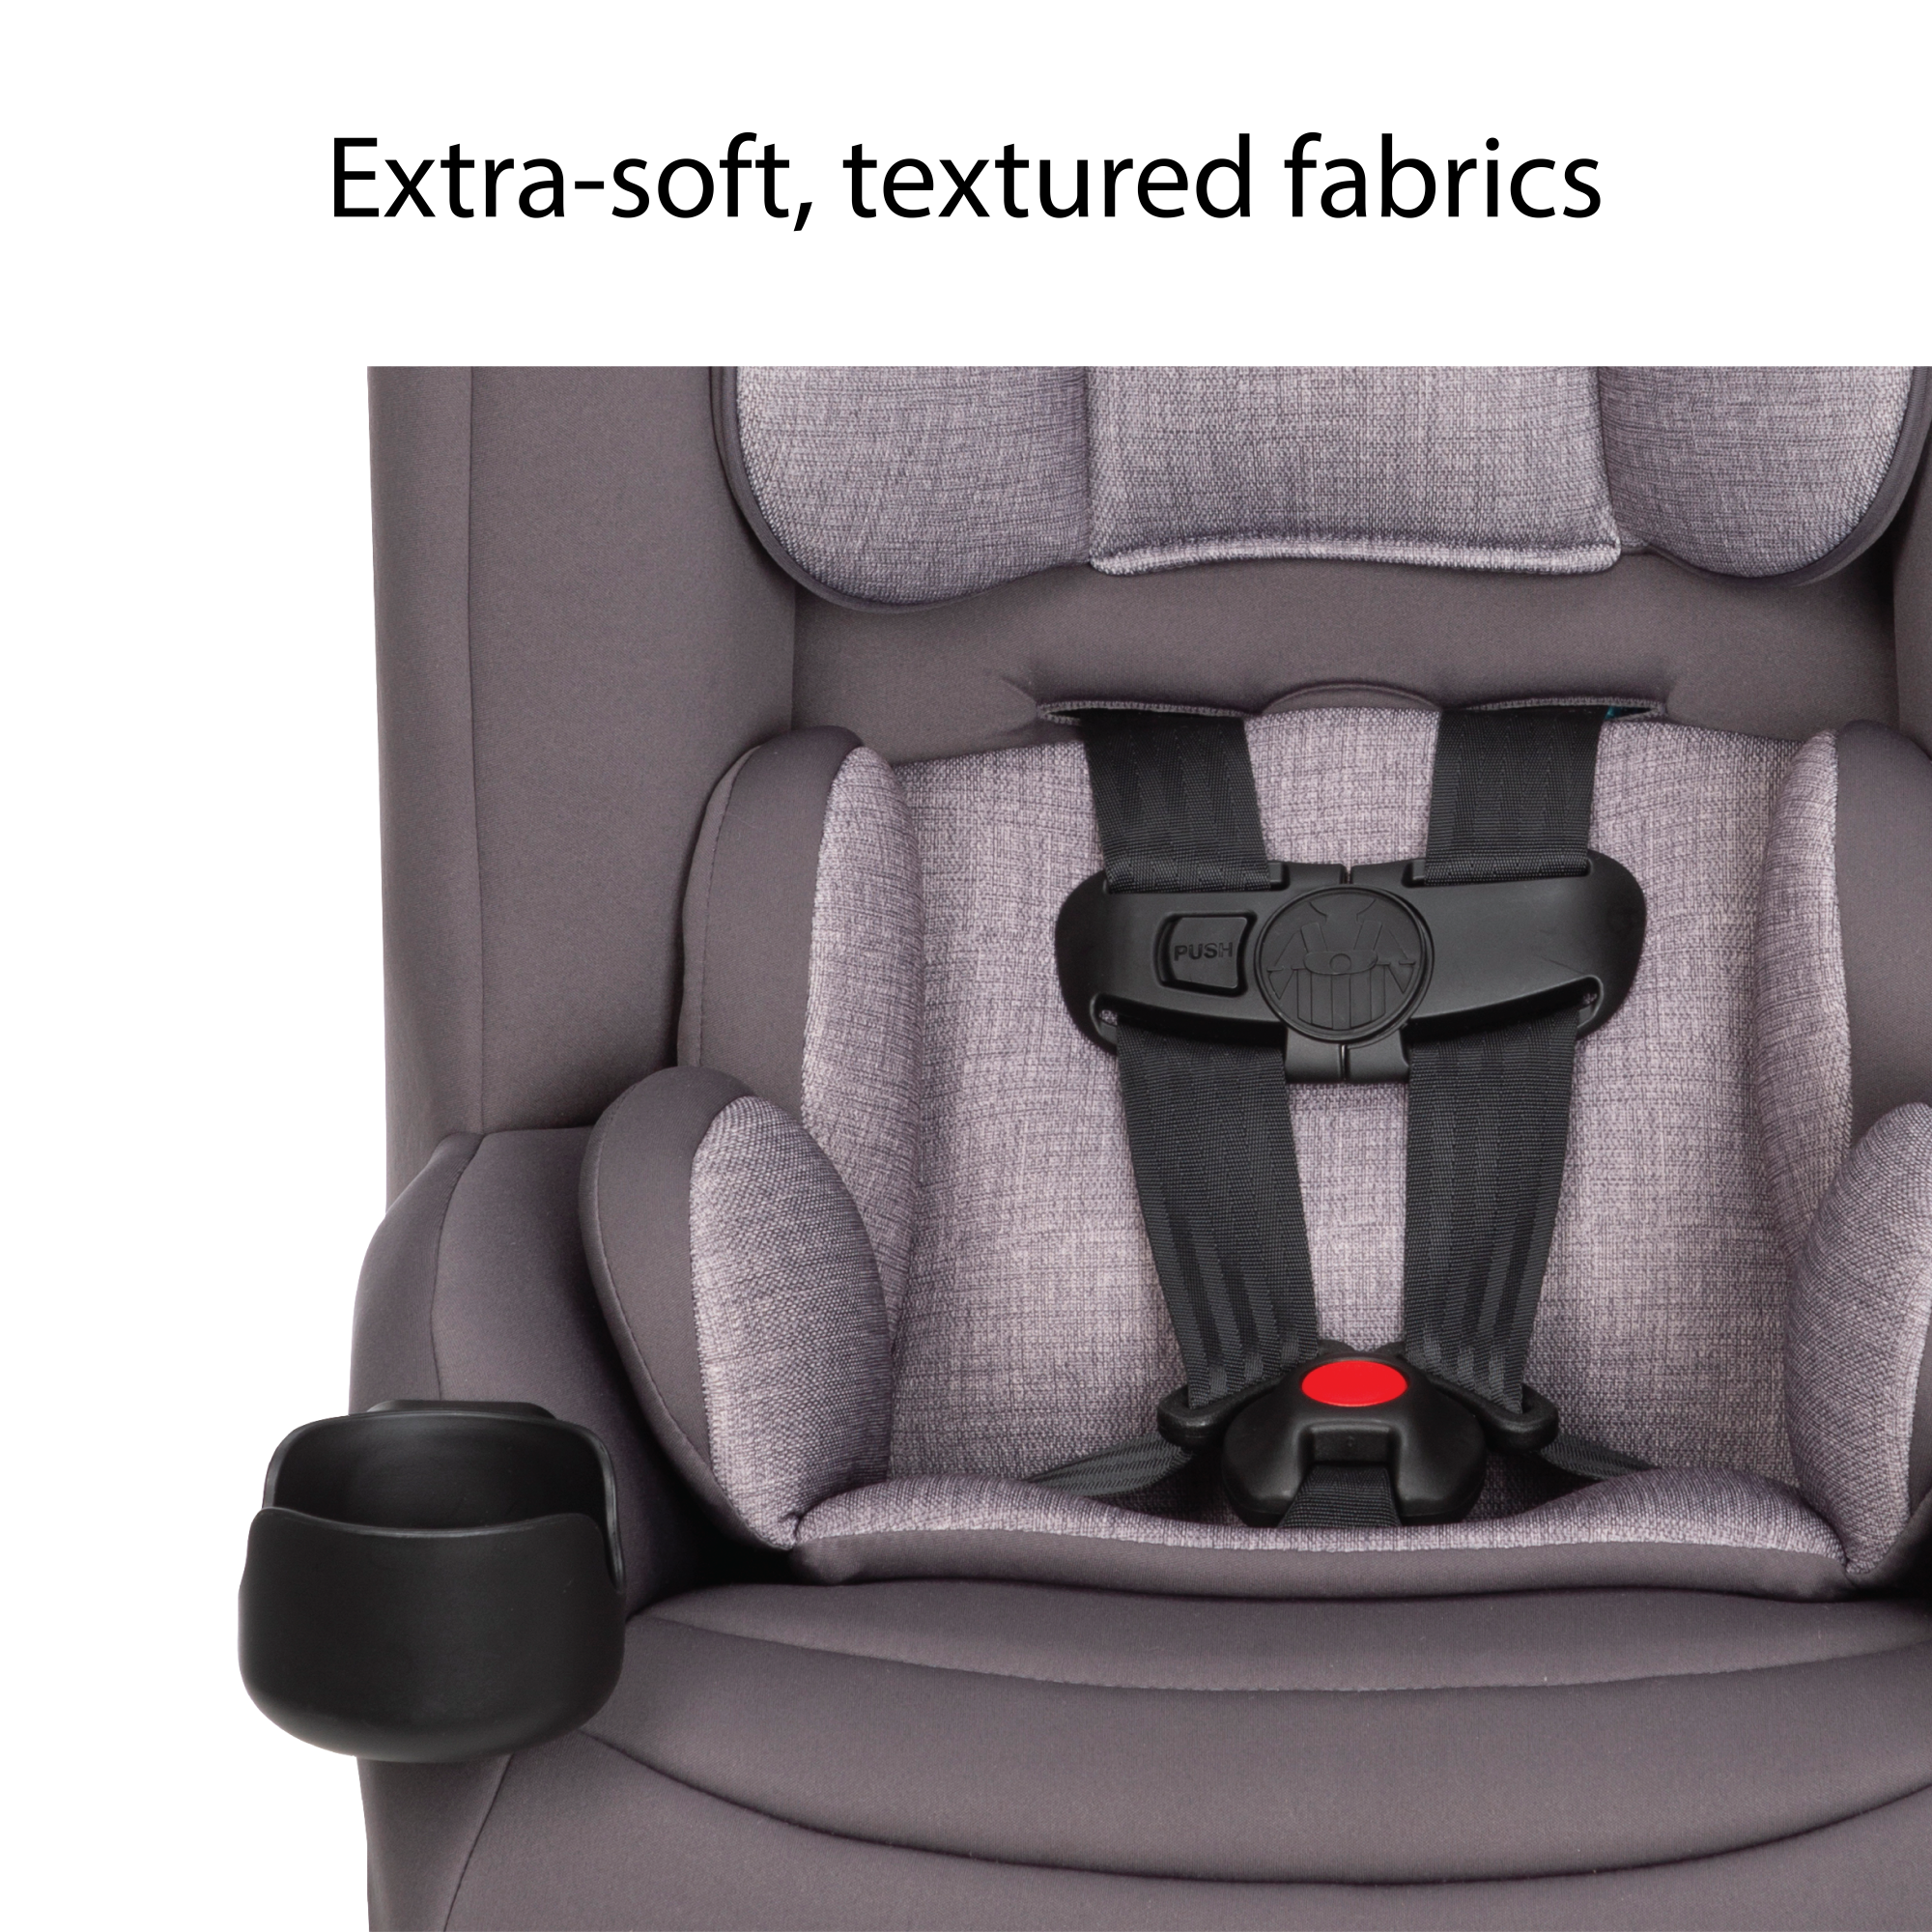 Jive 2-in-1 Convertible Car Seat - extra-soft, textured fabrics